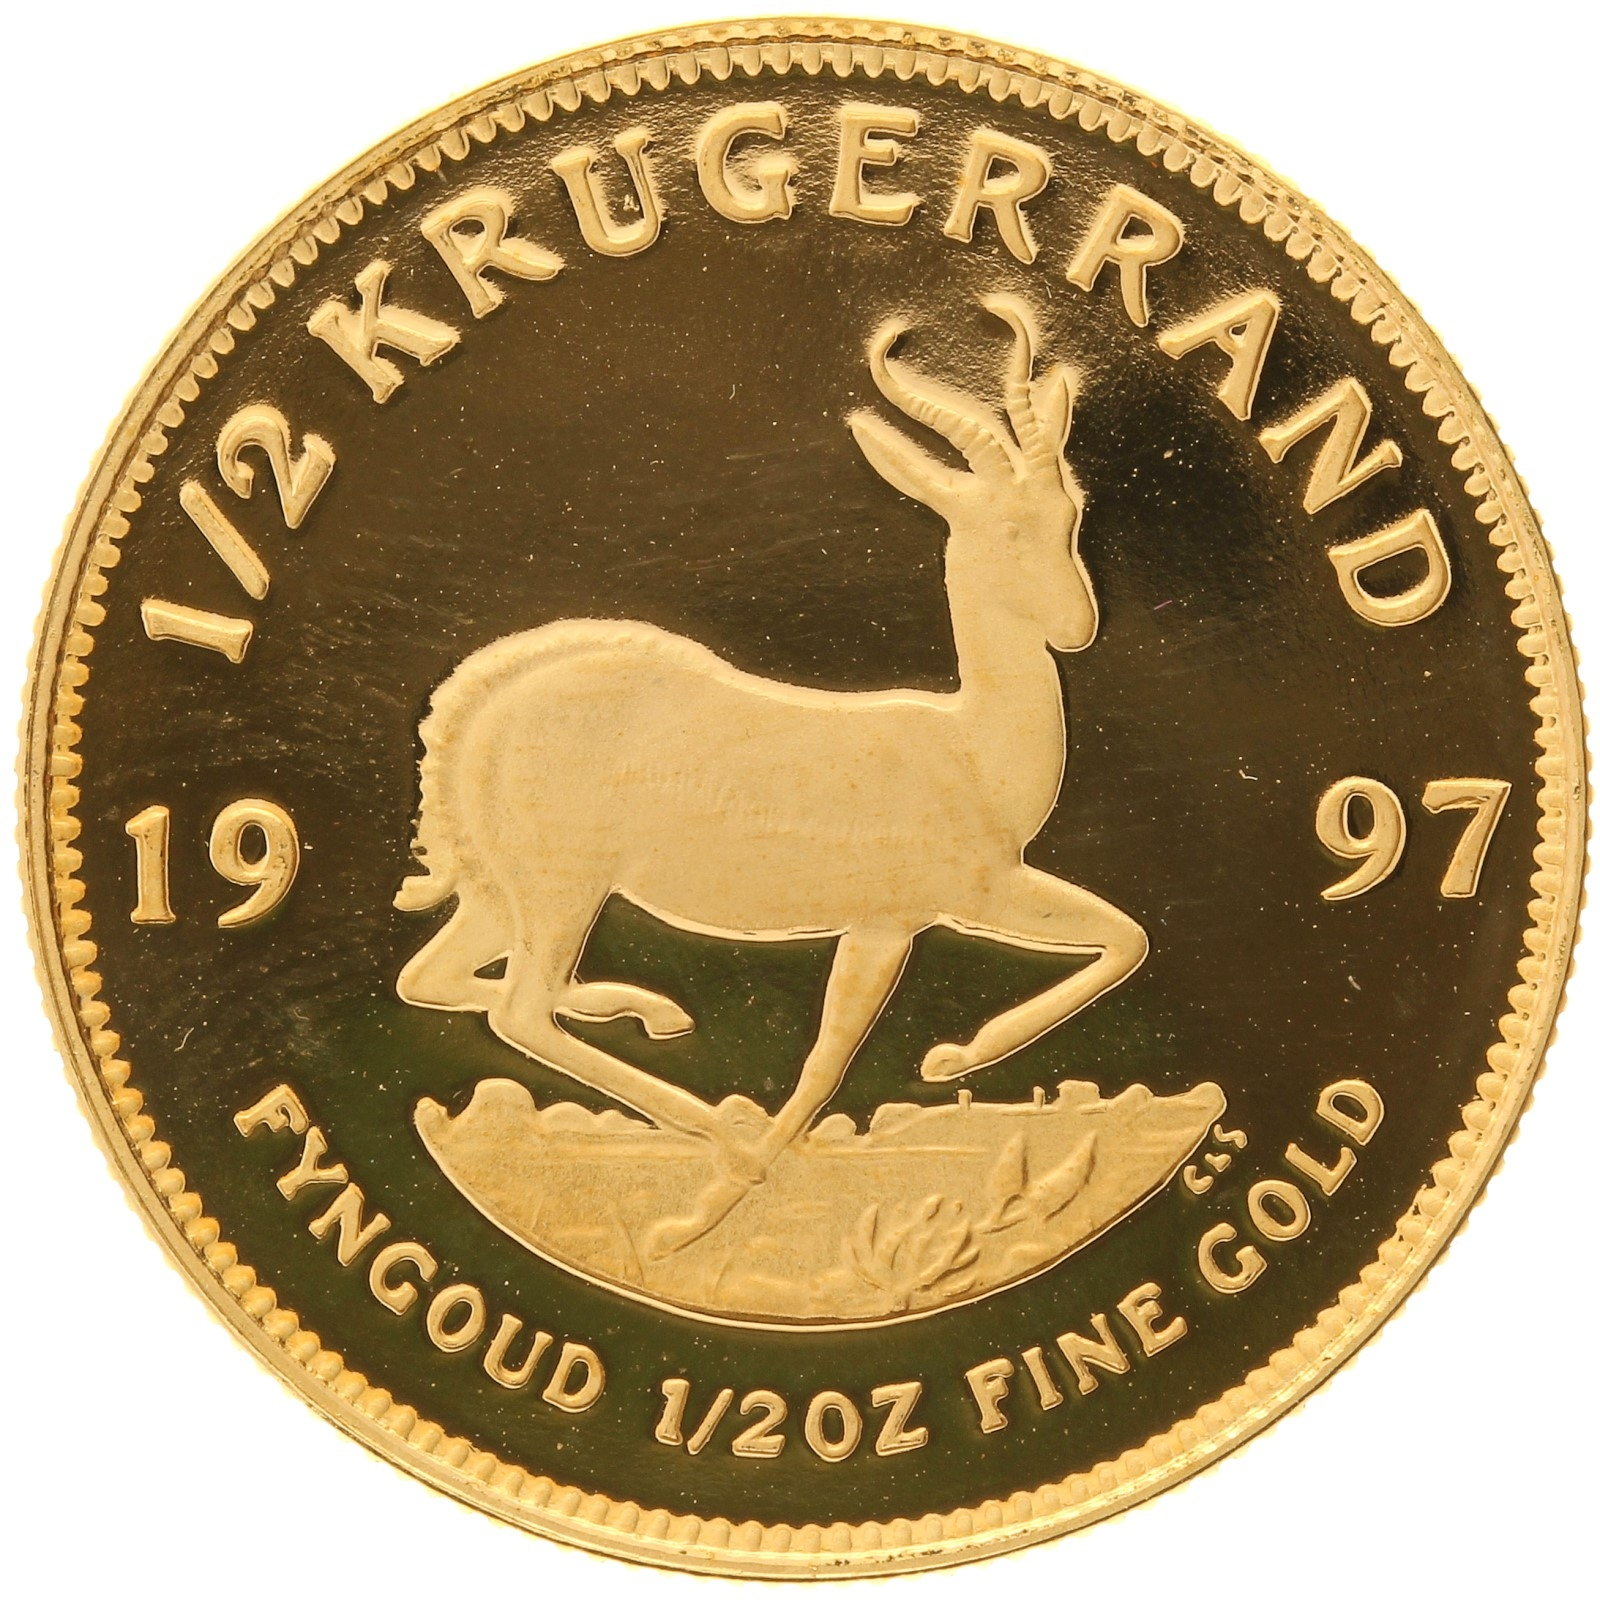 South Africa - ½ krugerrand - 1997 - 1/2oz